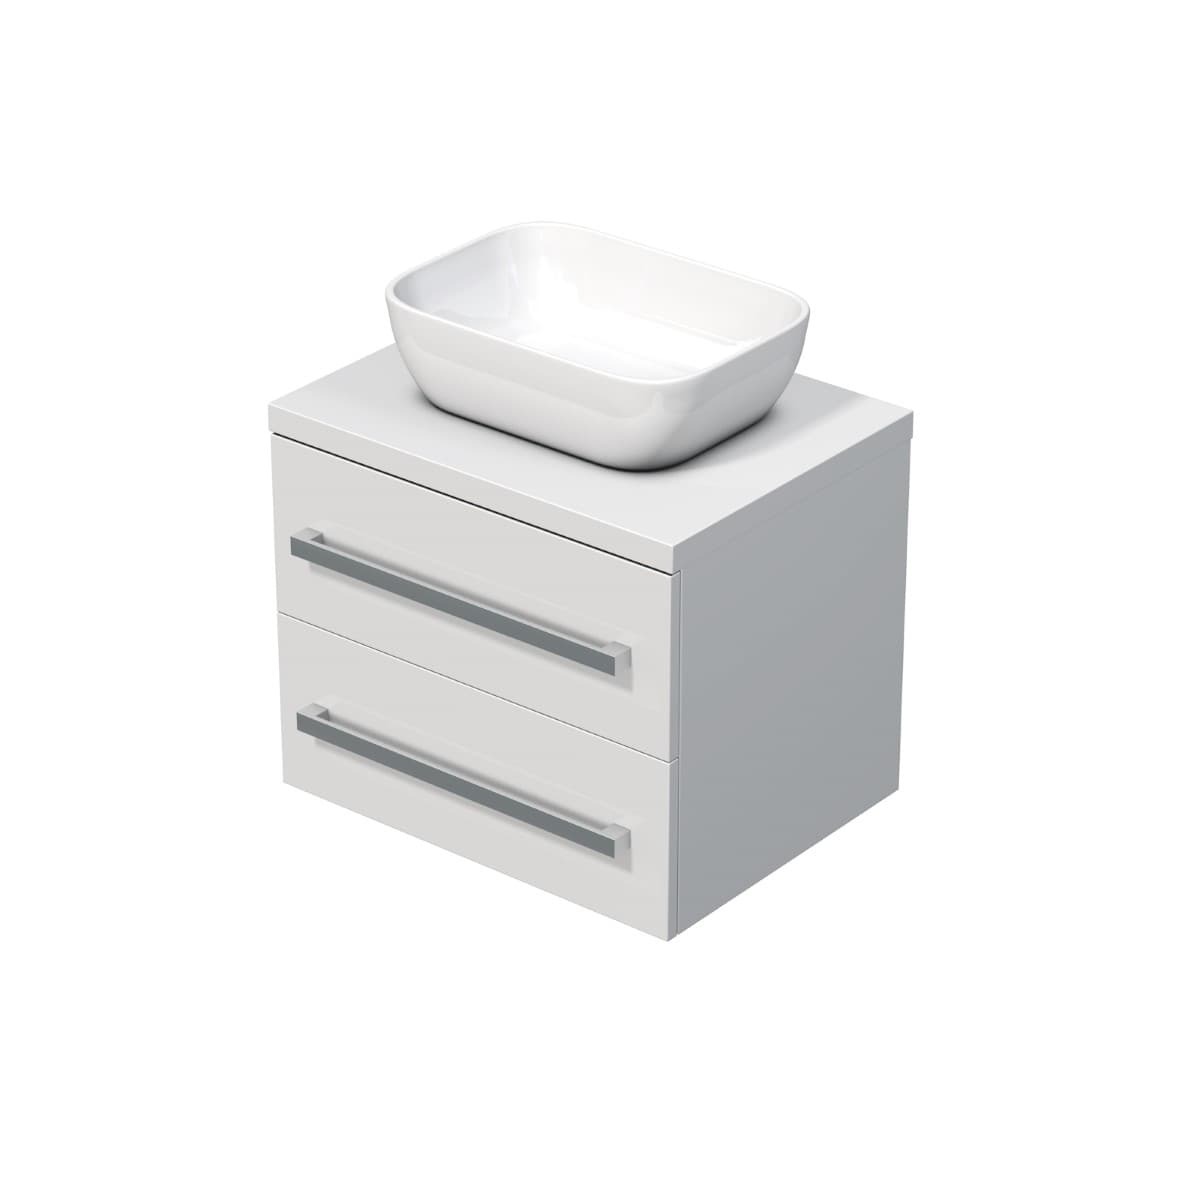 Koupelnová skříňka s krycí deskou Naturel Cube Way 60x53x46 cm bílá lesk CUBE461603BI45 Naturel